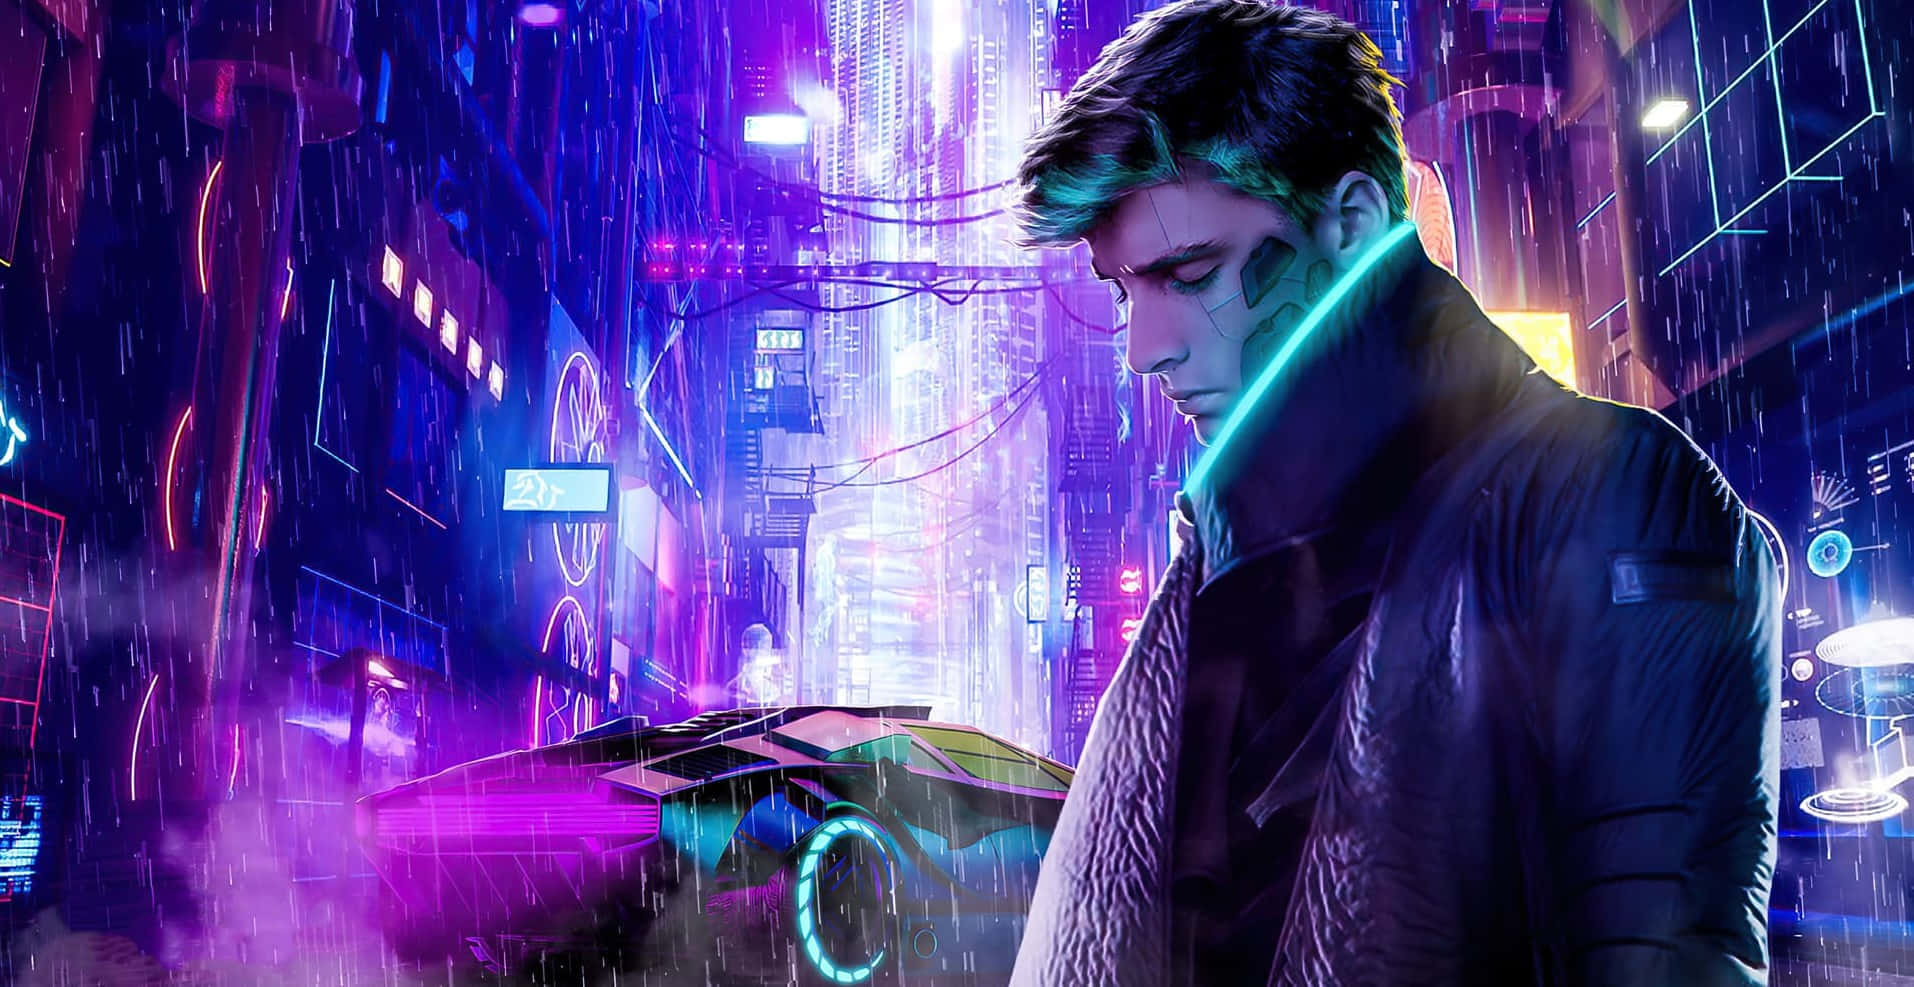 Cyberpunk Laptop With Guy In The Rain Wallpaper